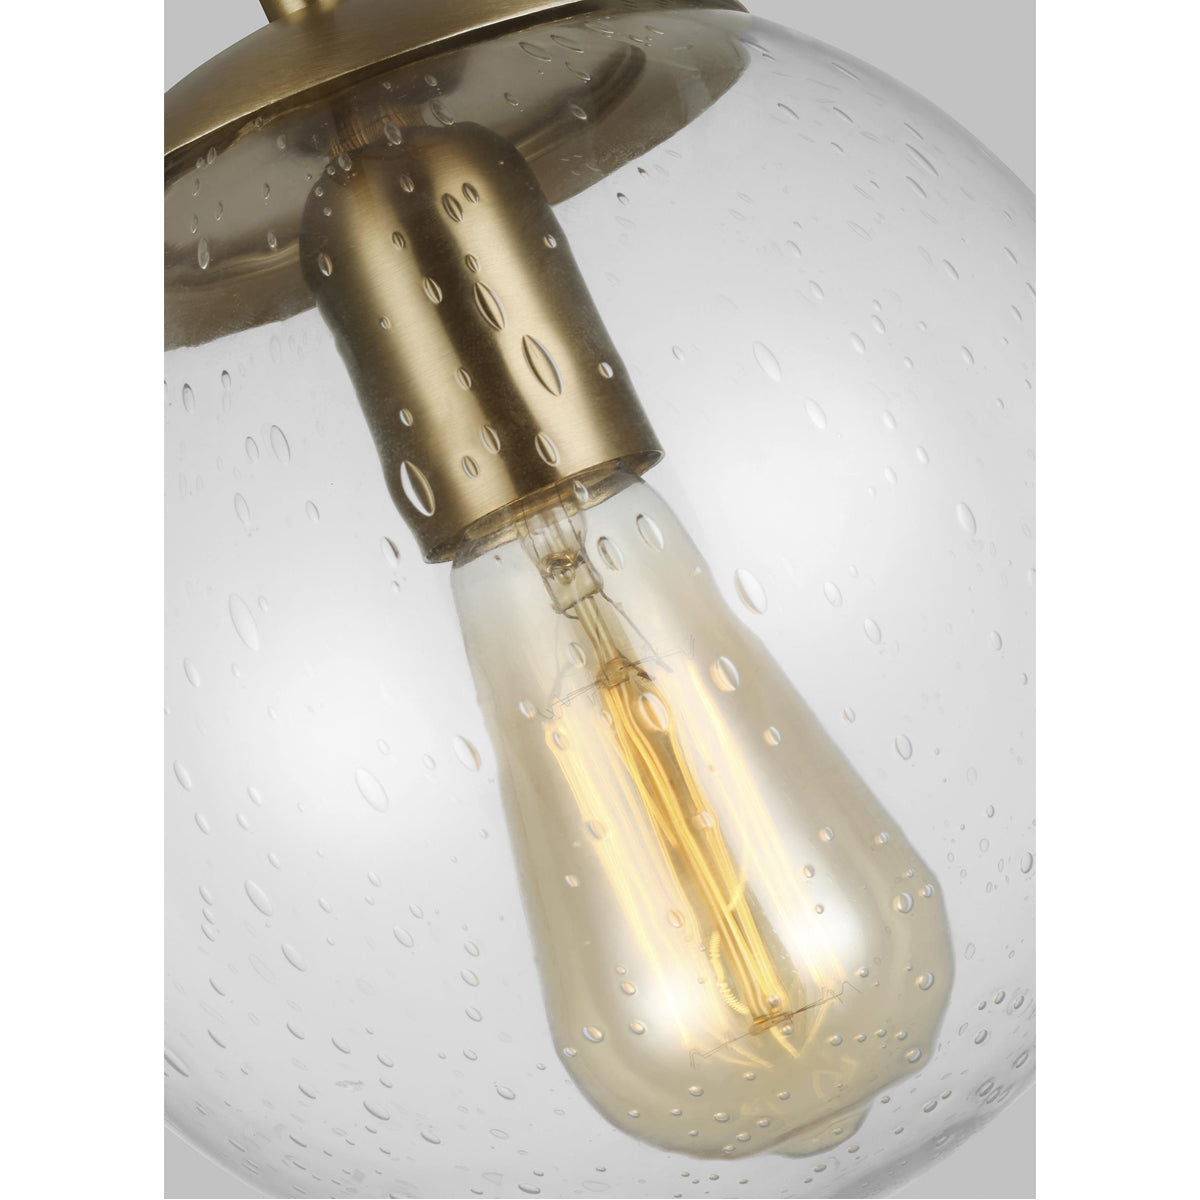 Sea Gull Lighting Leo-Hanging Globe 8&quot; 1-Light Pendant with Bulb